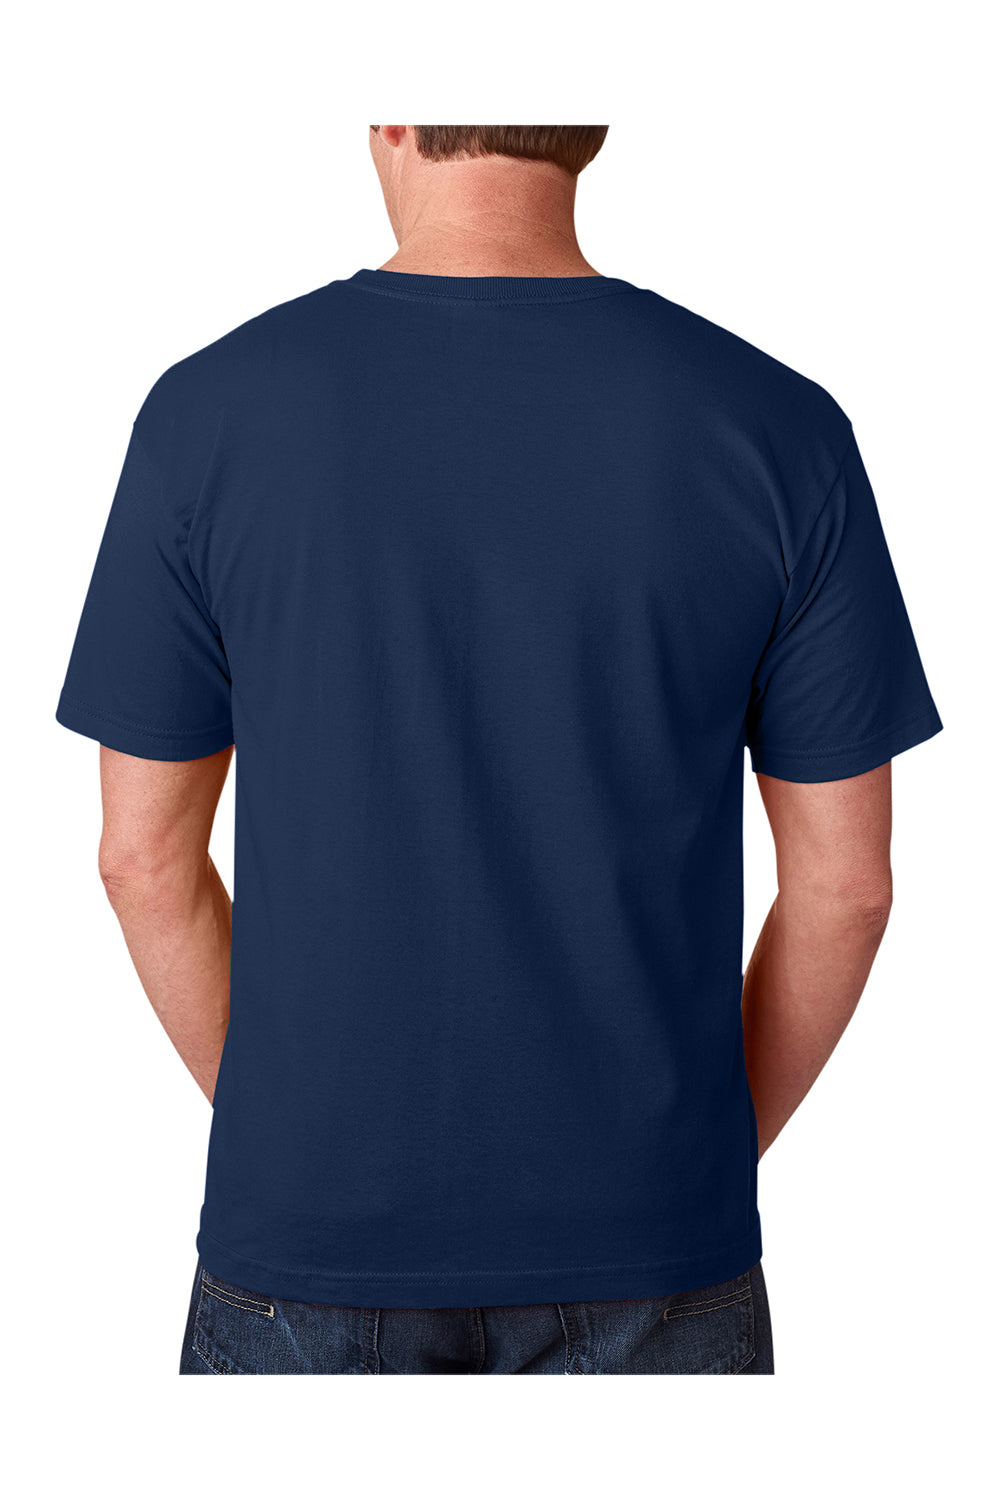 Bayside BA5040 Mens USA Made Short Sleeve Crewneck T-Shirt Light Navy Blue Model Back